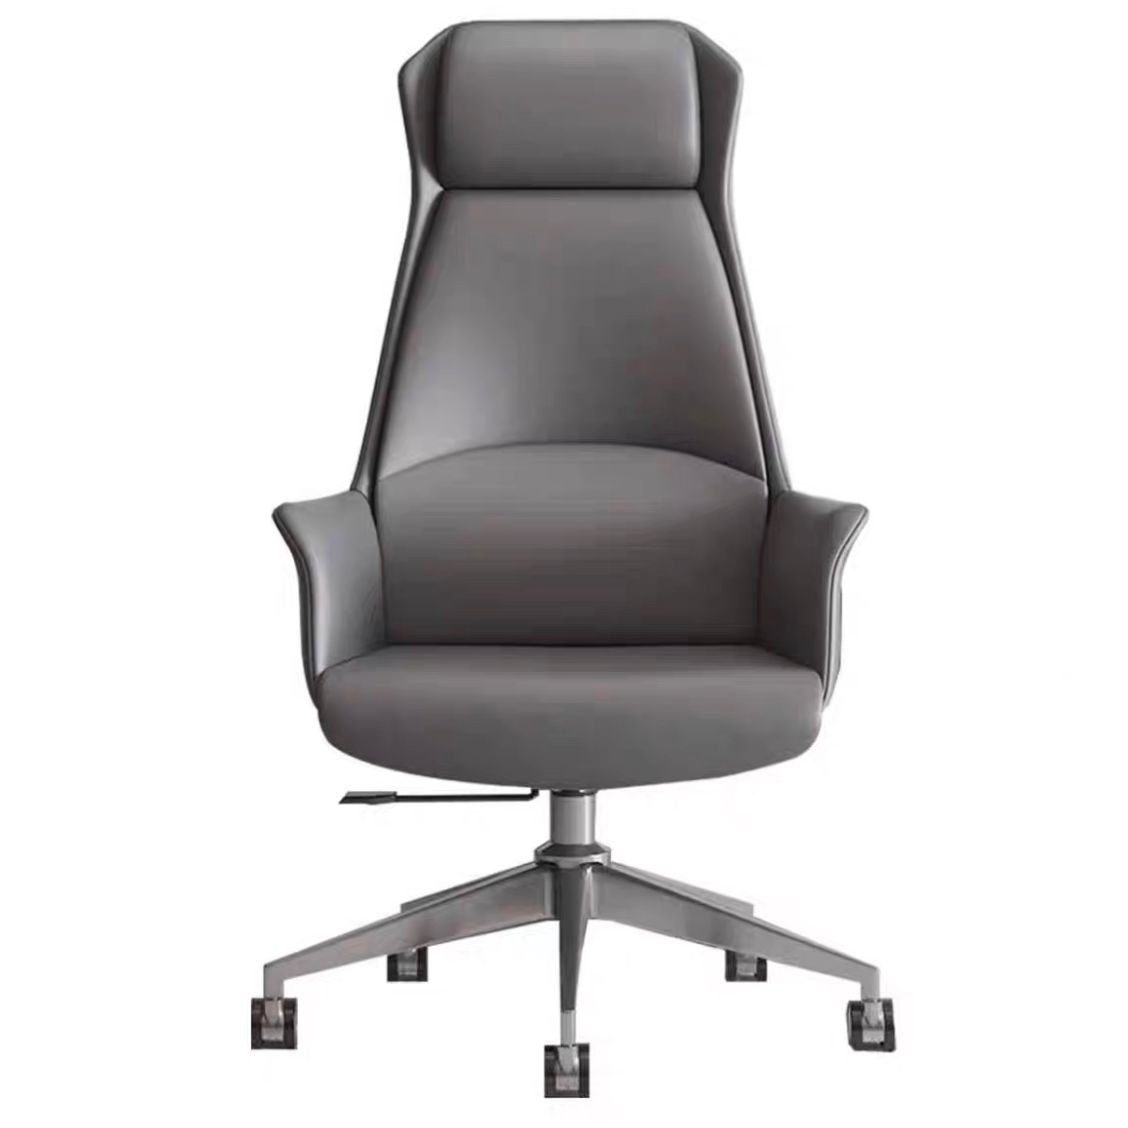 Ergonomic Dove Grey Rawhide Office Furniture with Tilt Available, Headrest, Swivel Wheels, and Armrest, Light Gray, Microfiber Leather